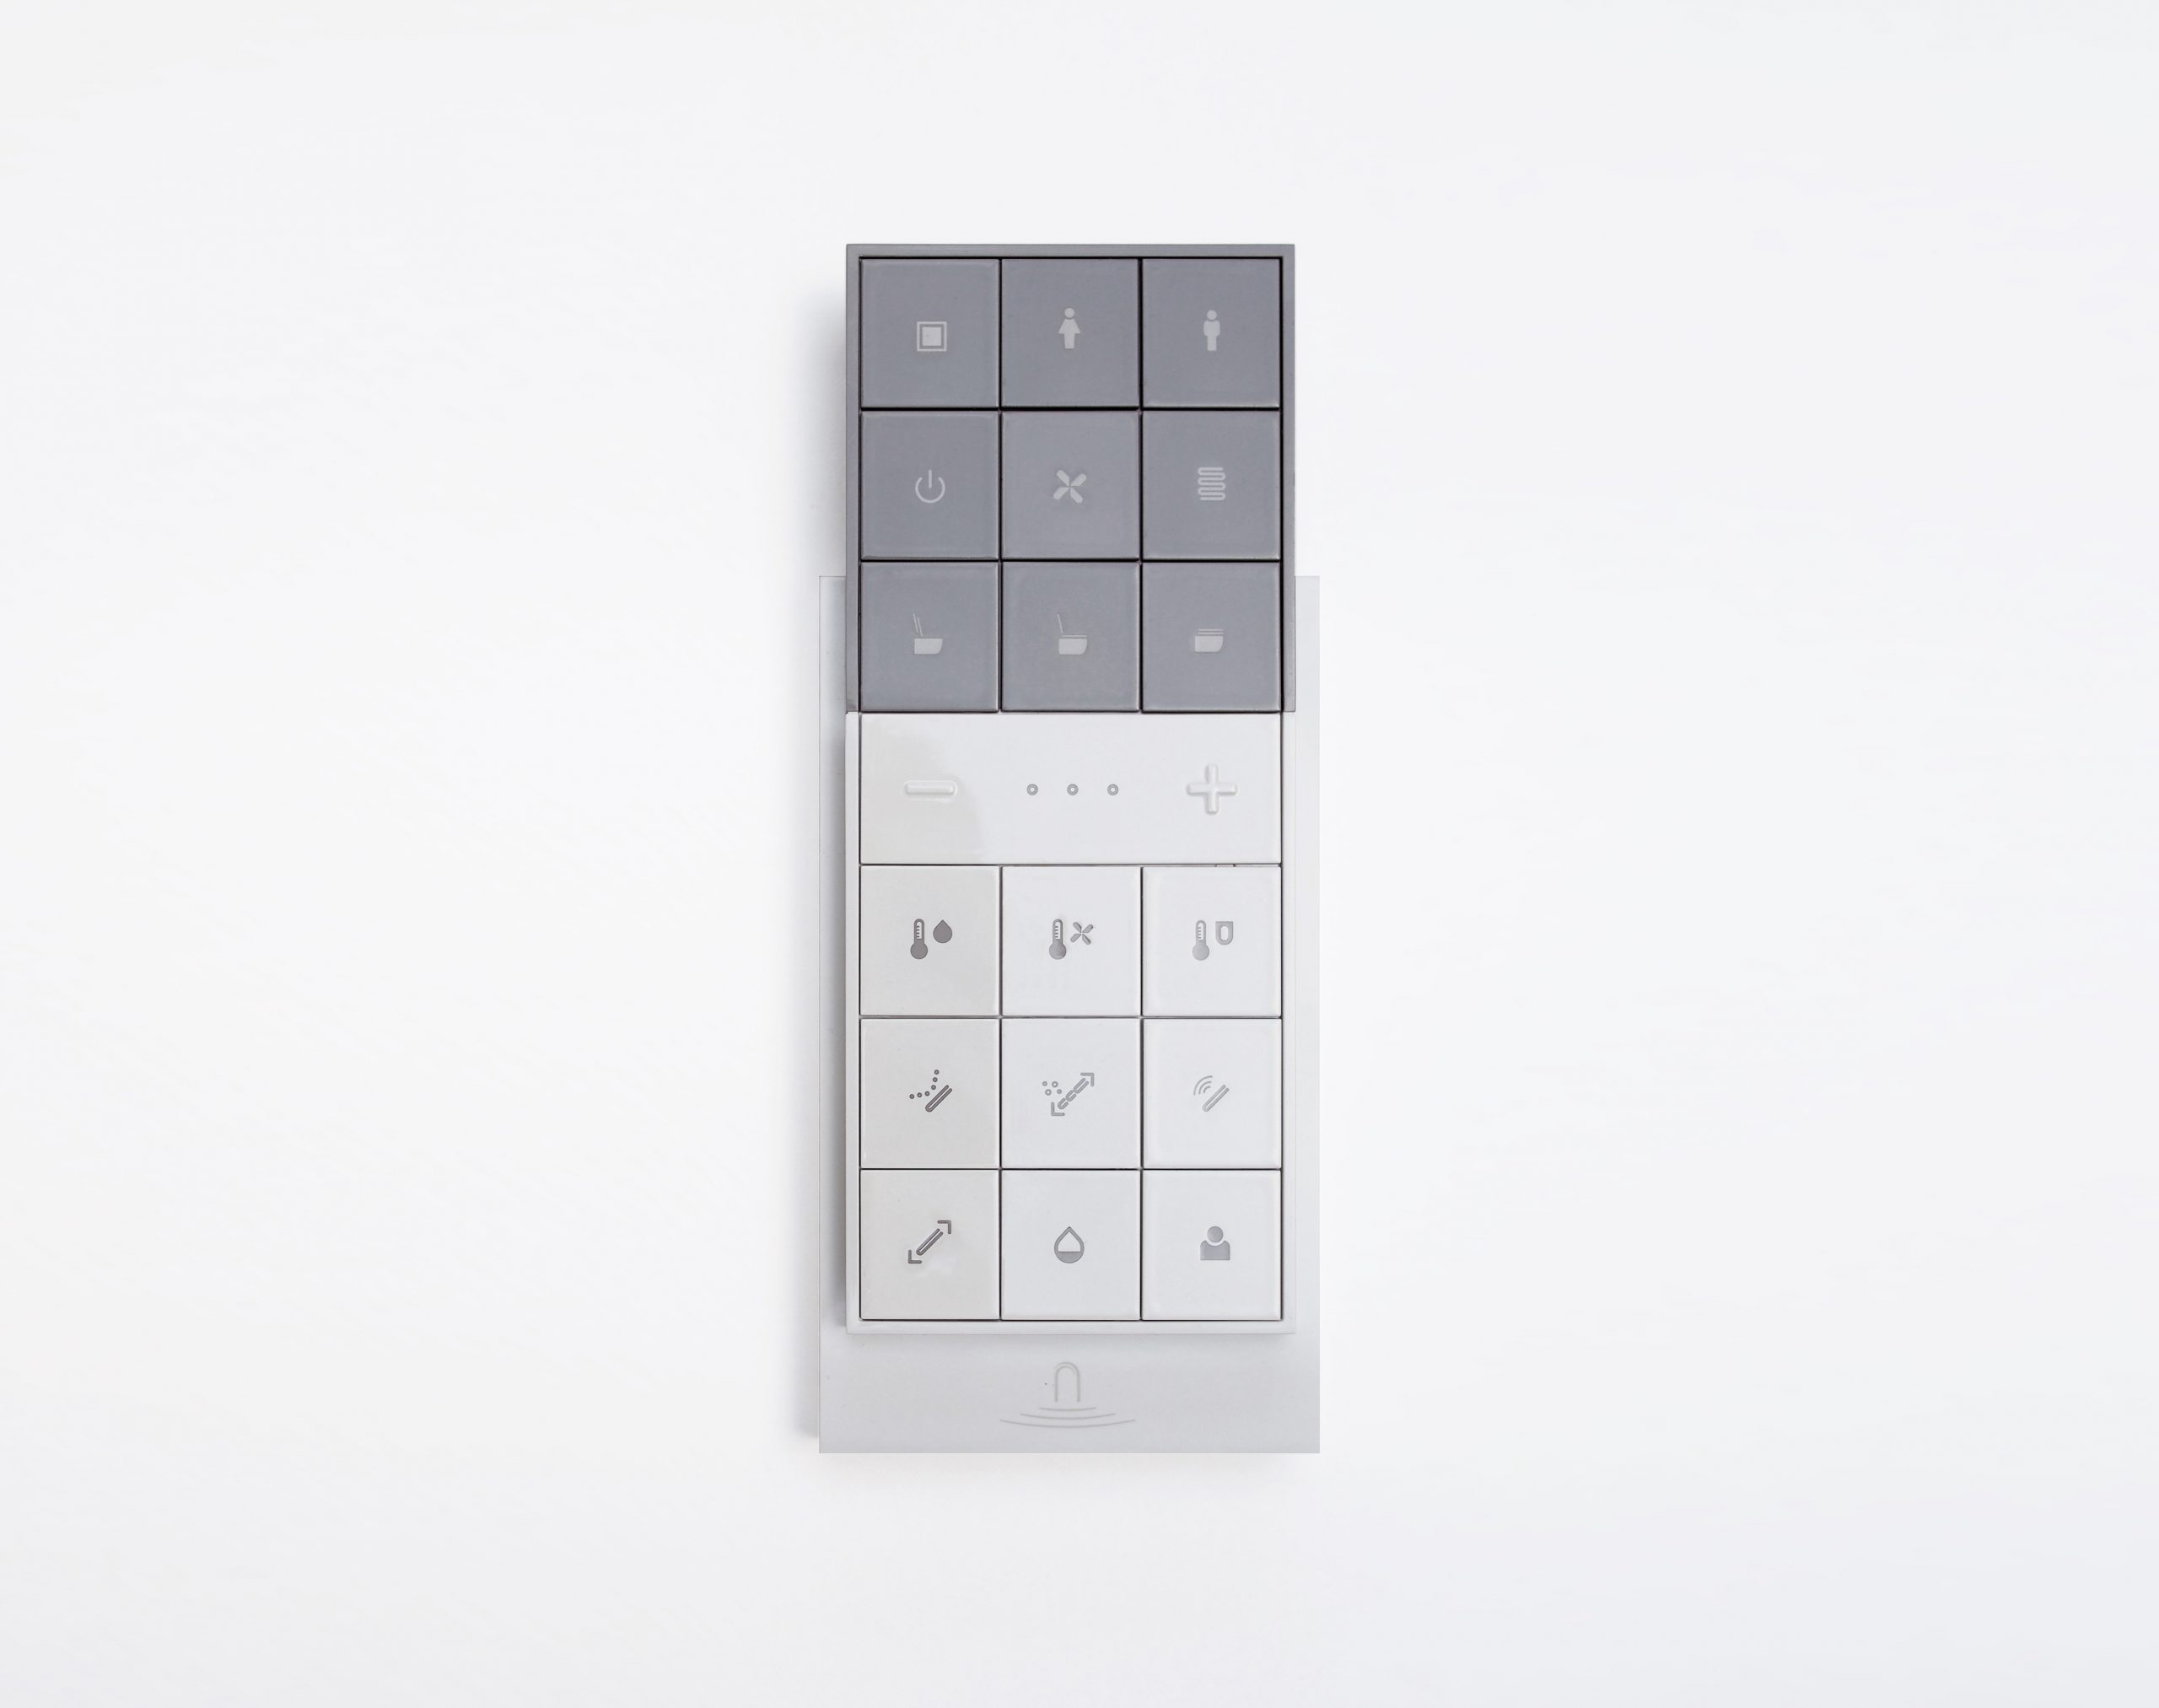 ViClean remote control series designed by Debiasi Sandri for Villeroy & Boch